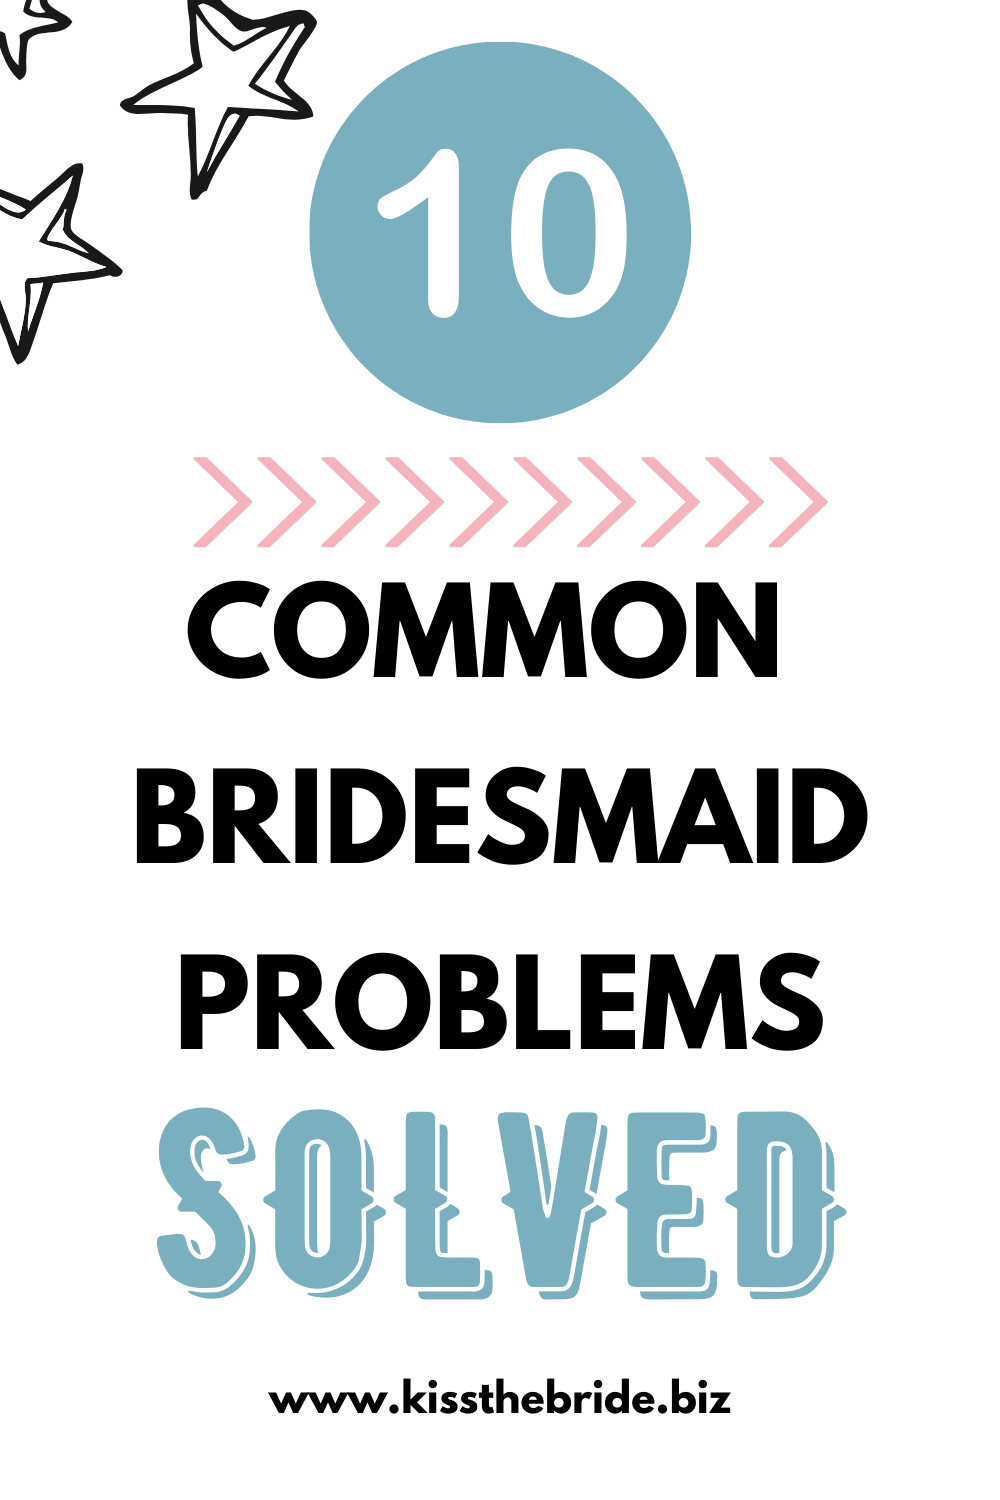 Bridesmaids tips